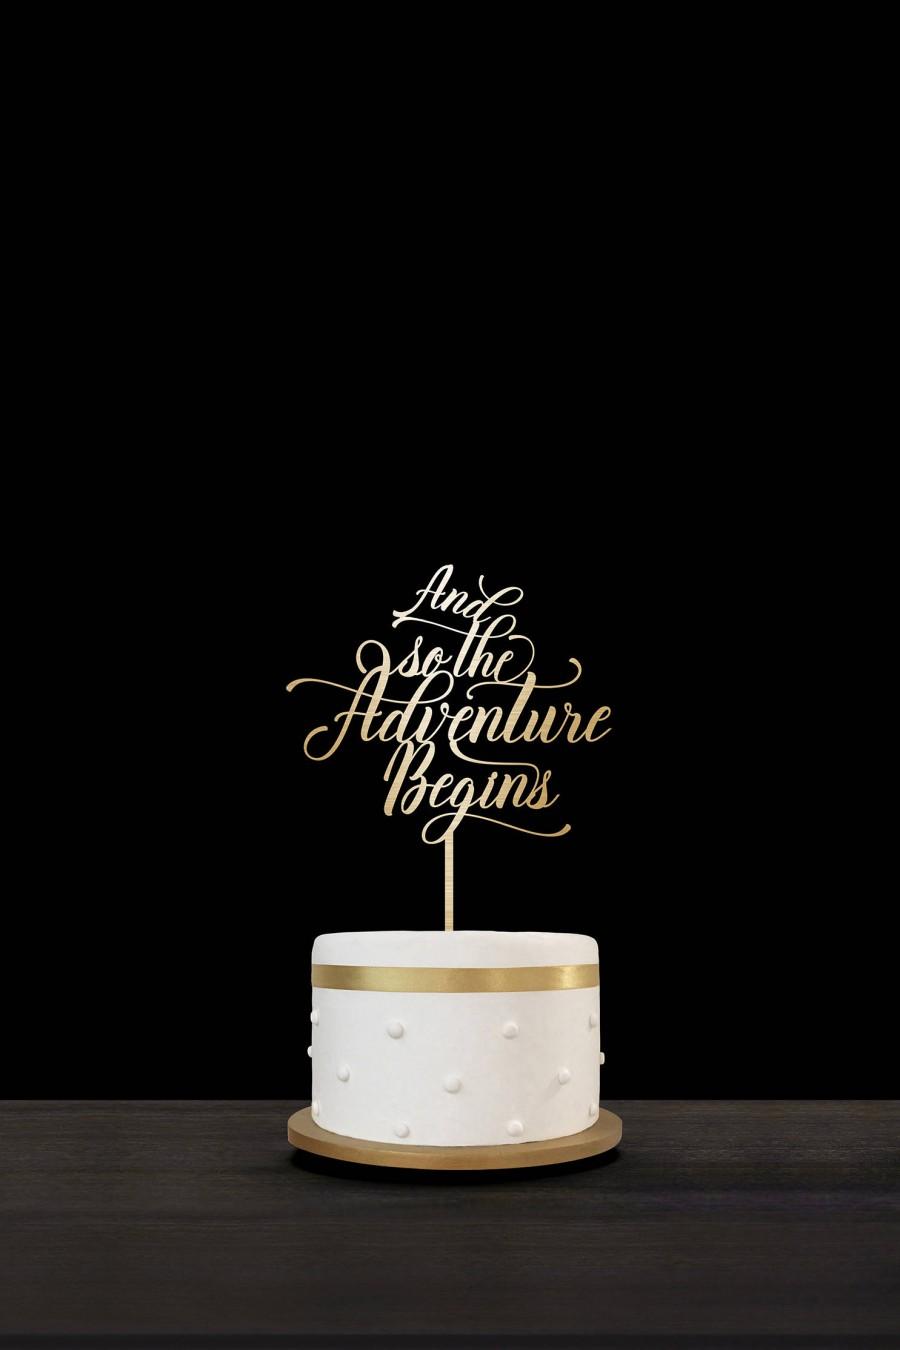 Hochzeit - Customized Wedding Cake Topper, Personalized Cake Topper for Wedding,Custom Personalized Wedding Cake Topper, Adventure Begins Cake Topper20